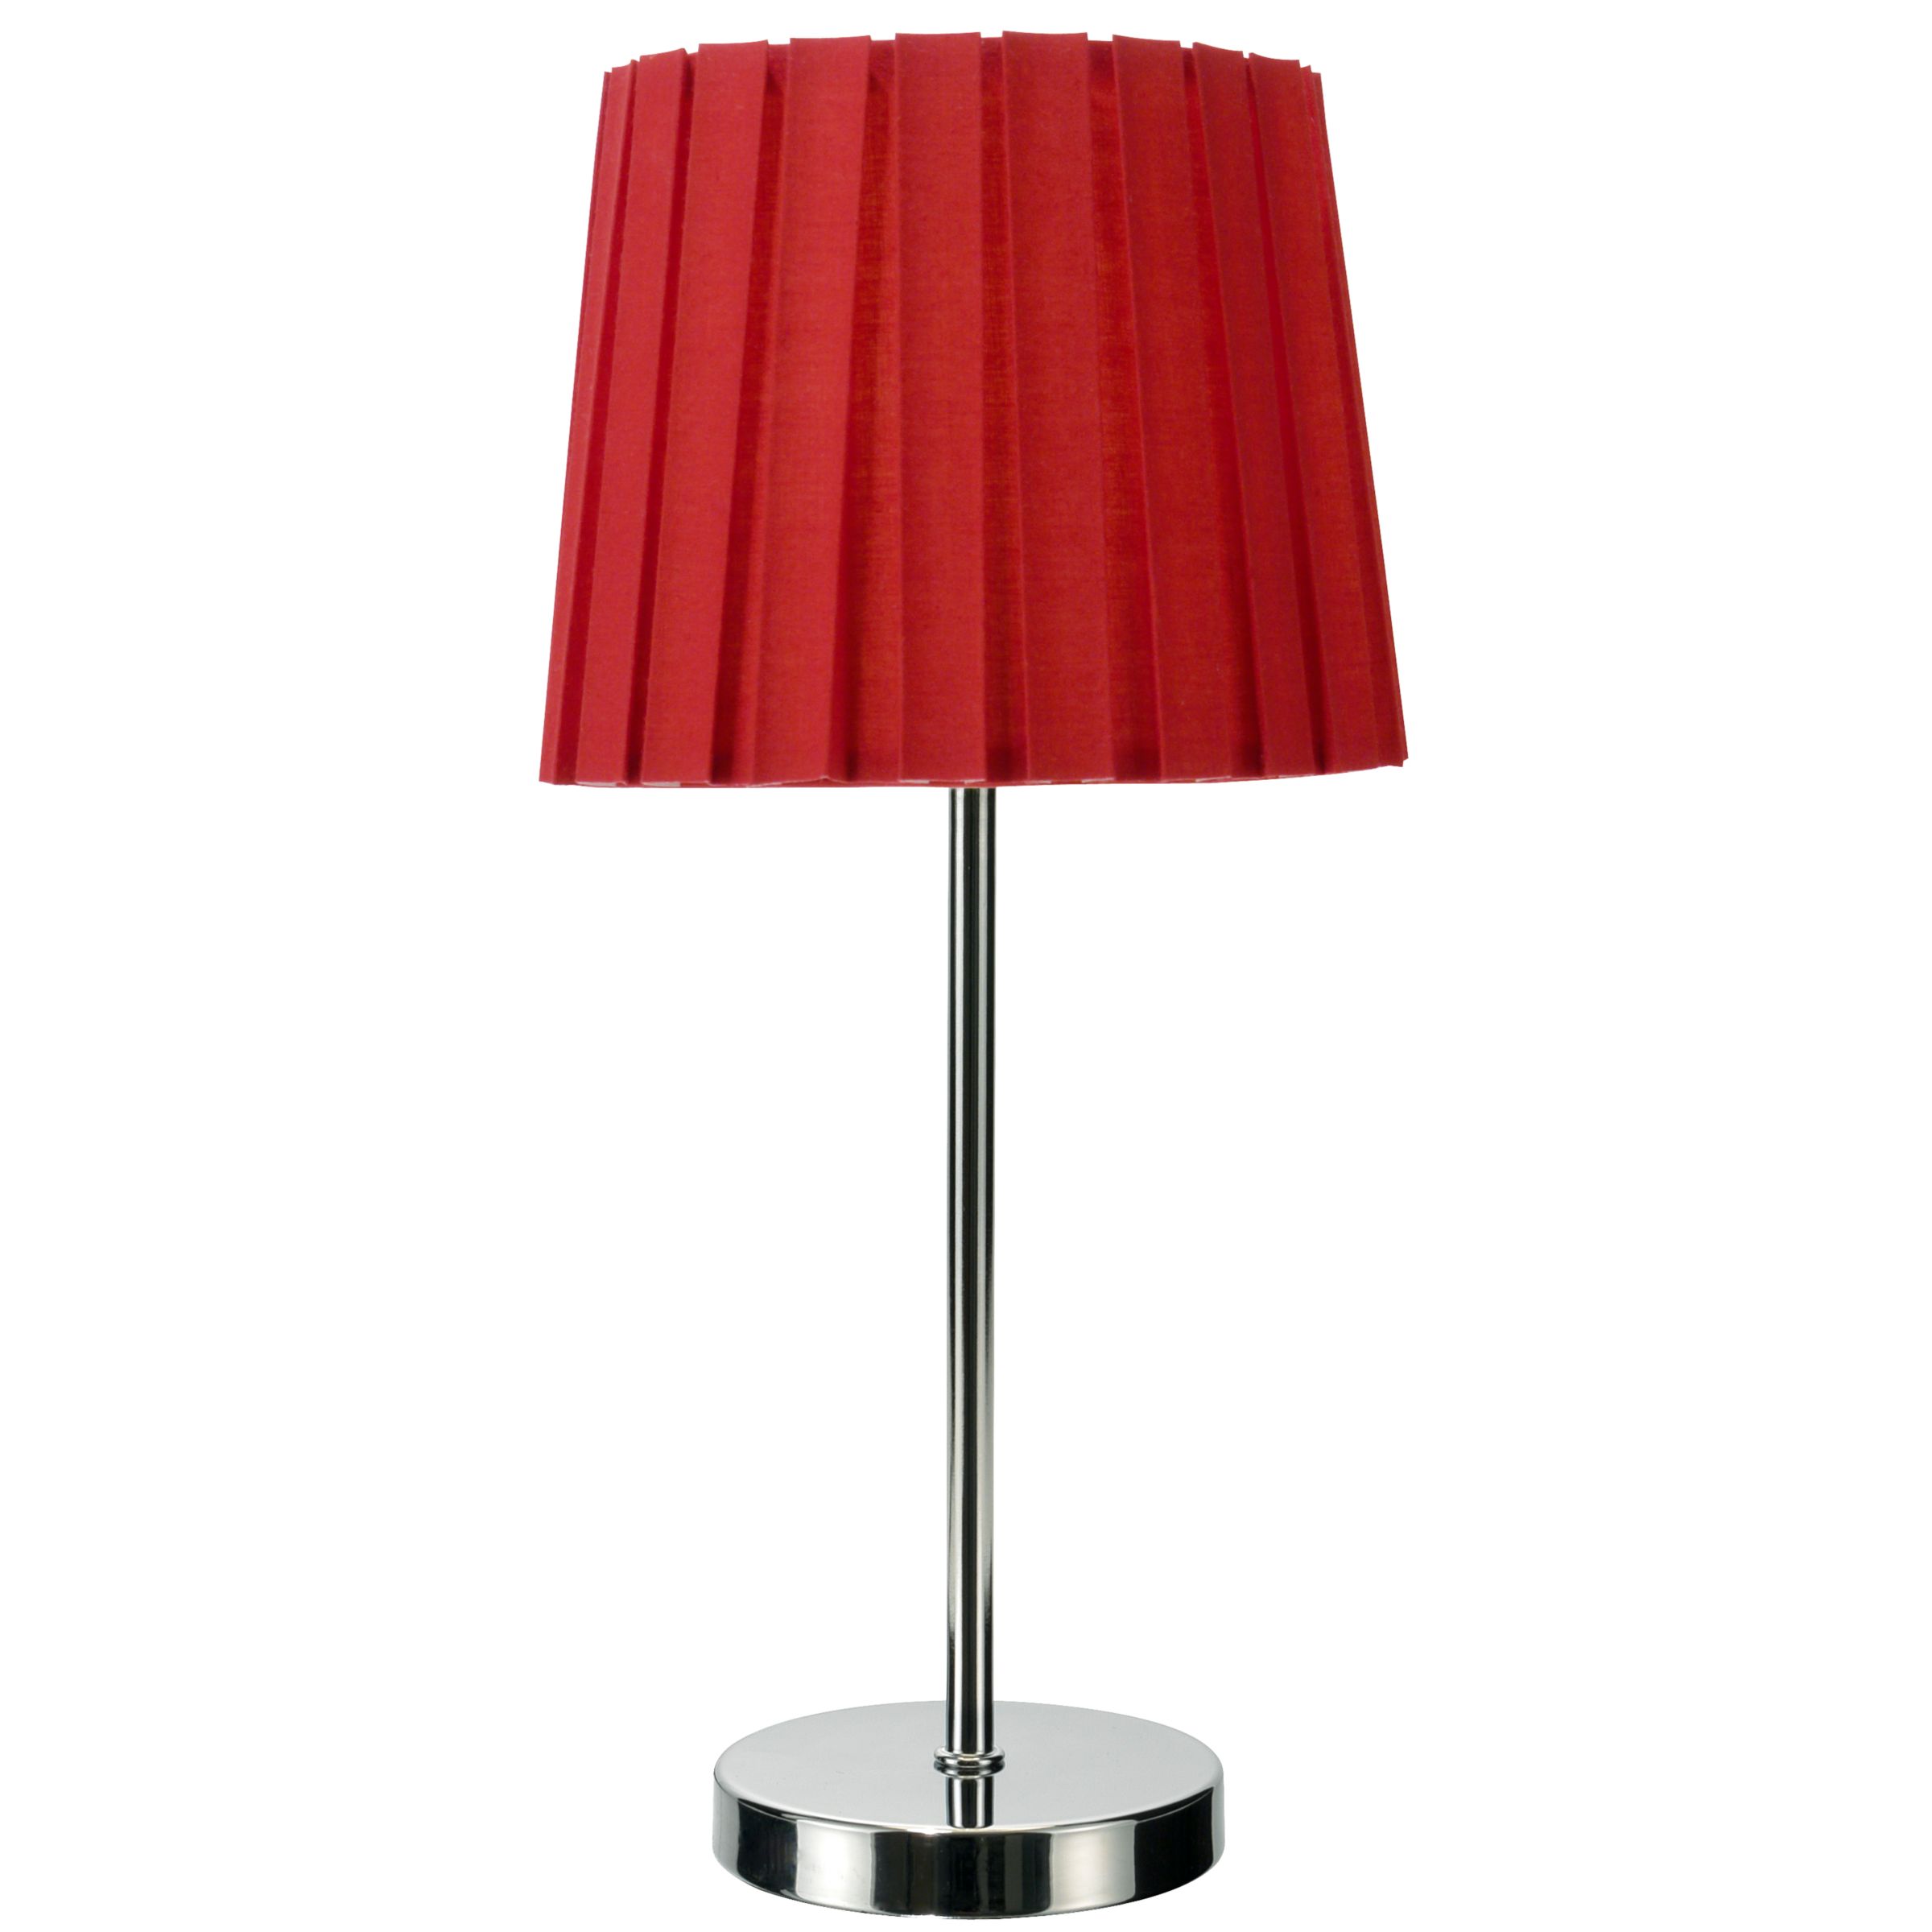 John Lewis Sunita Table Lamp, Red